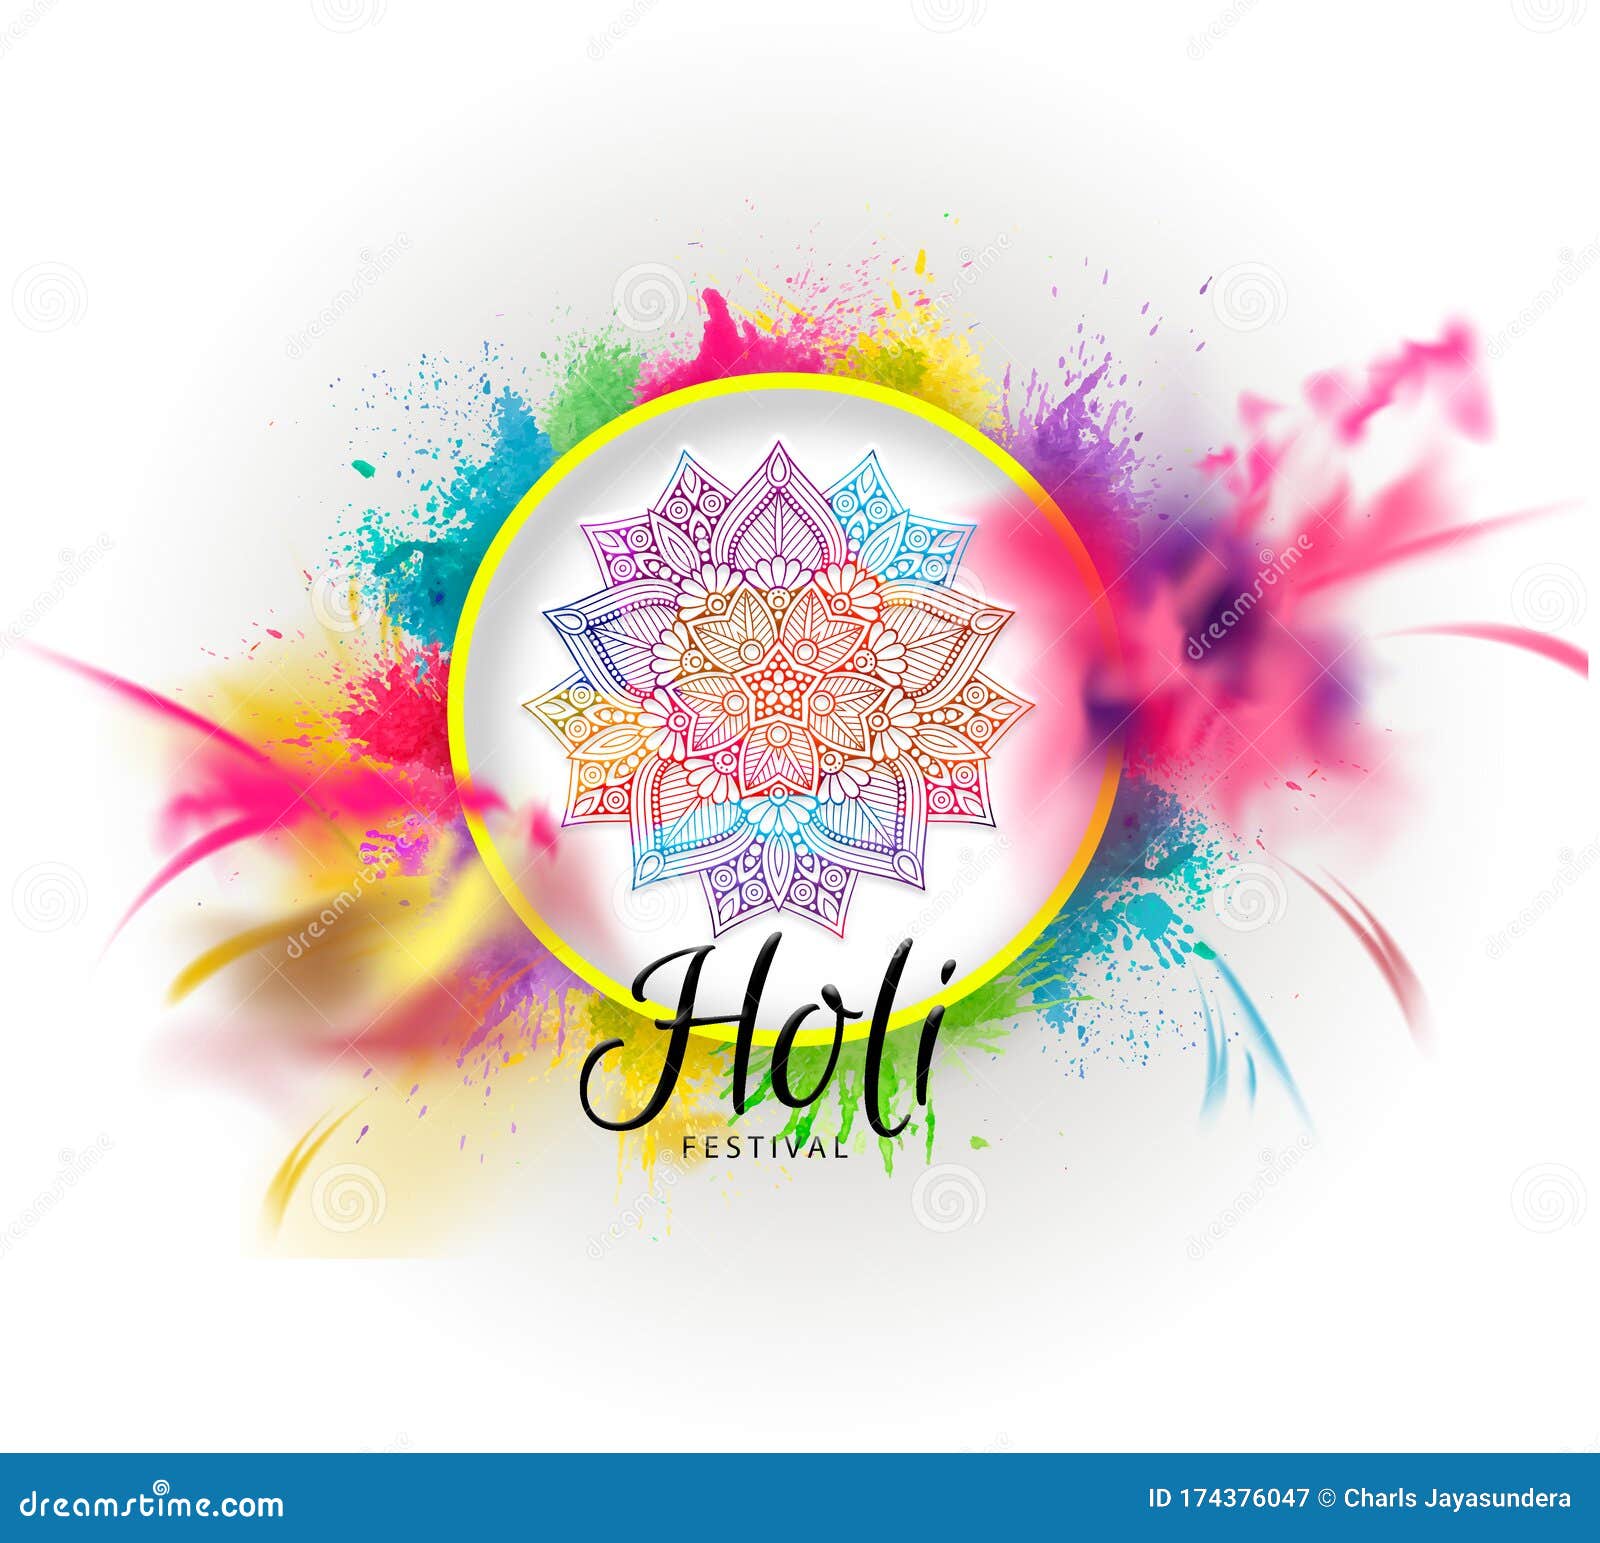 Holi festival wallpaper stock illustration. Illustration of holi - 174376047